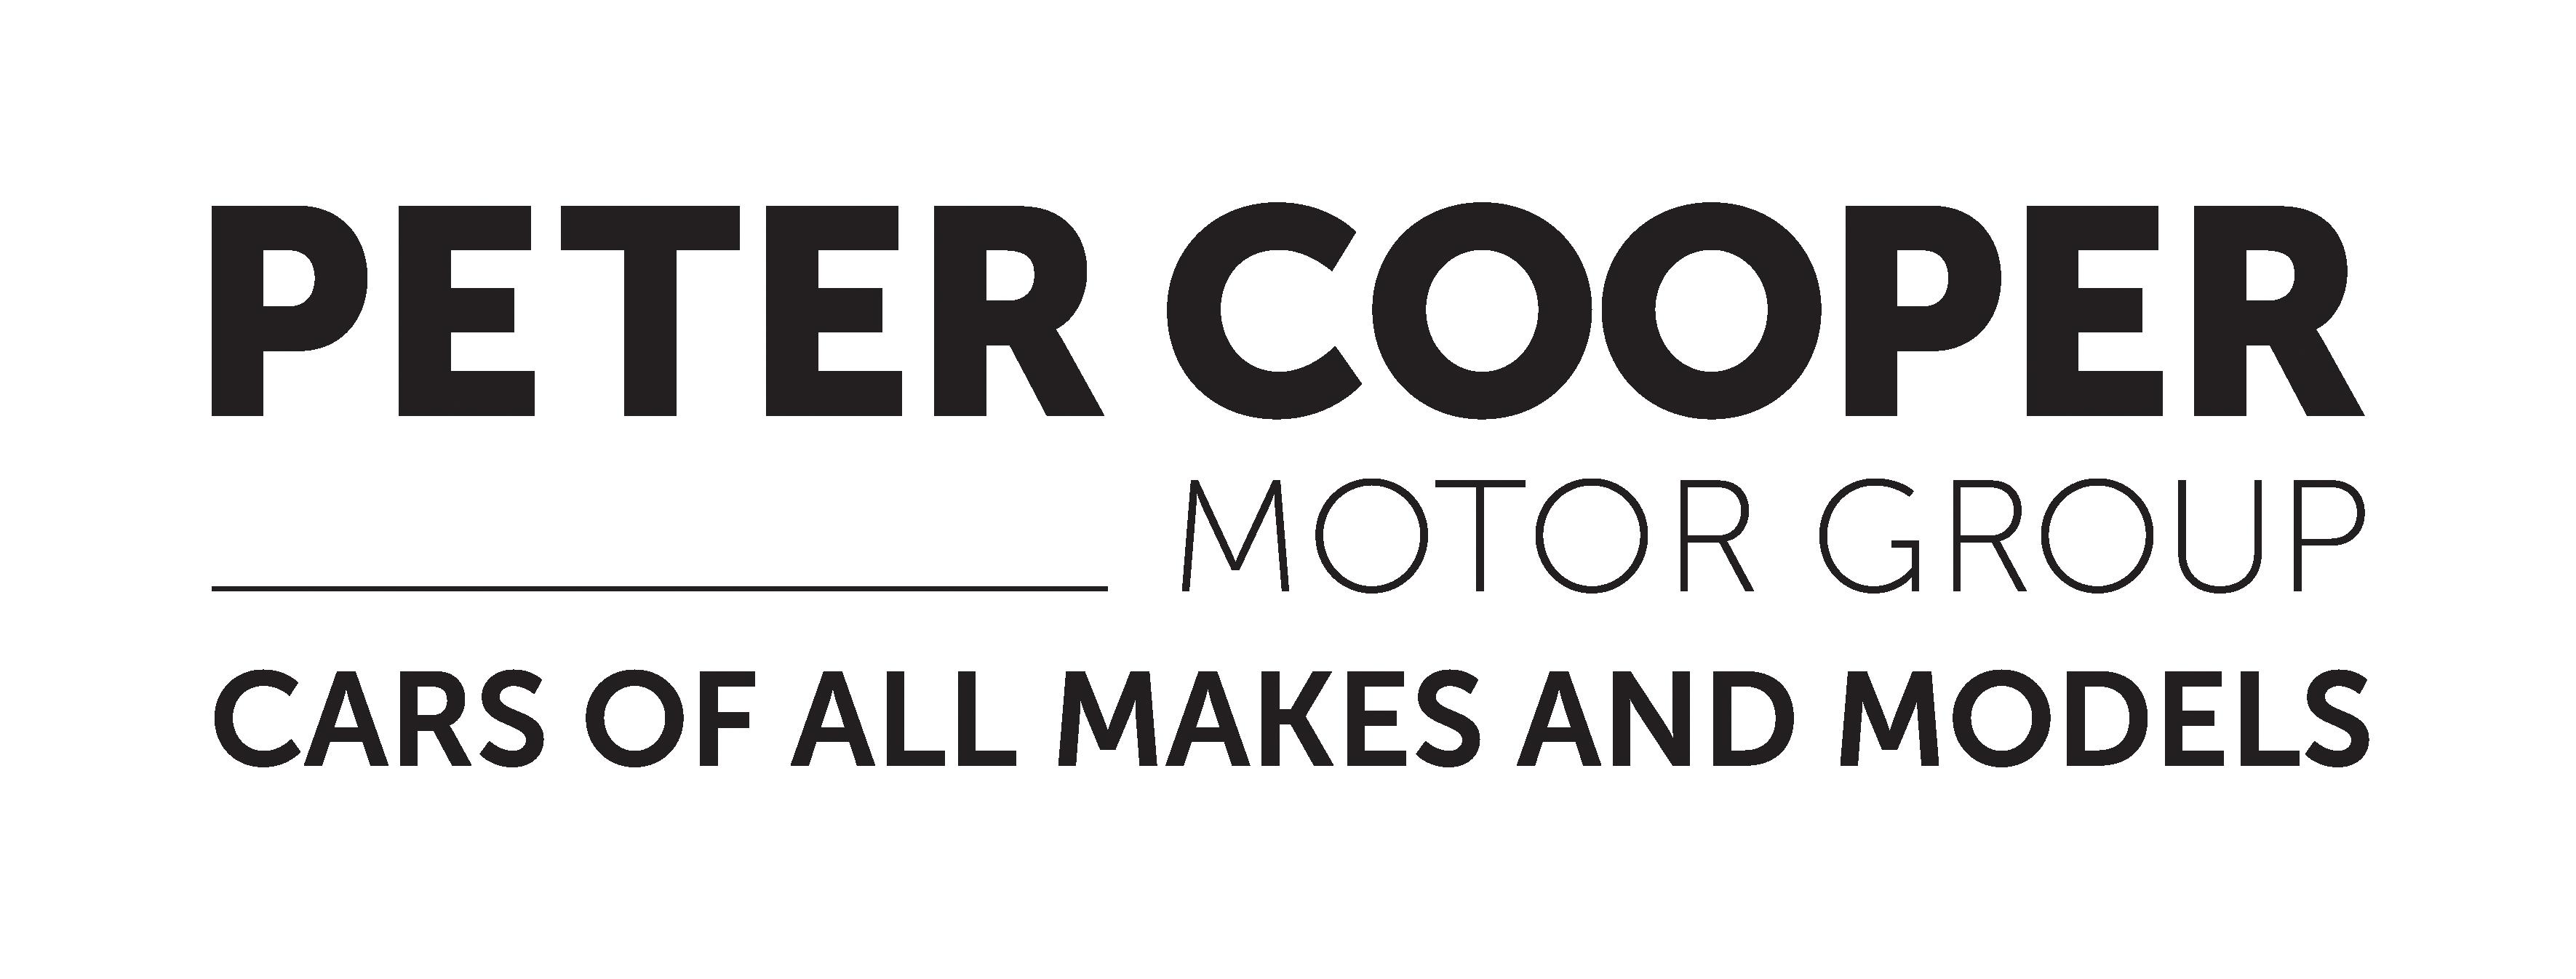 Peter Cooper Motor Group 3